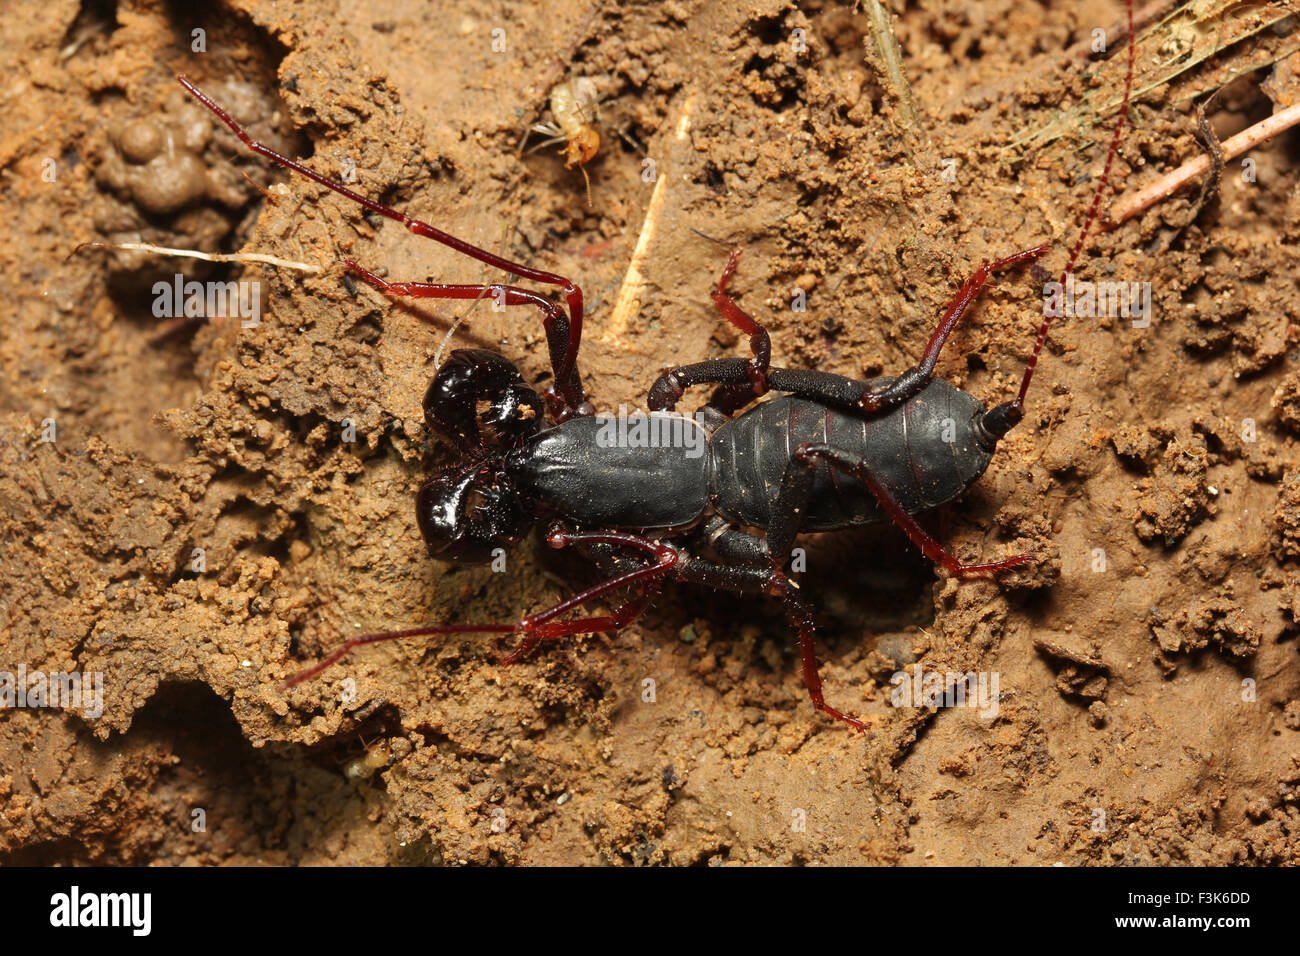 Whiptail scorpion or vinegar scorpion, Labochirus sp, Uropygi, Trishna, Tripura , India Stock Photo